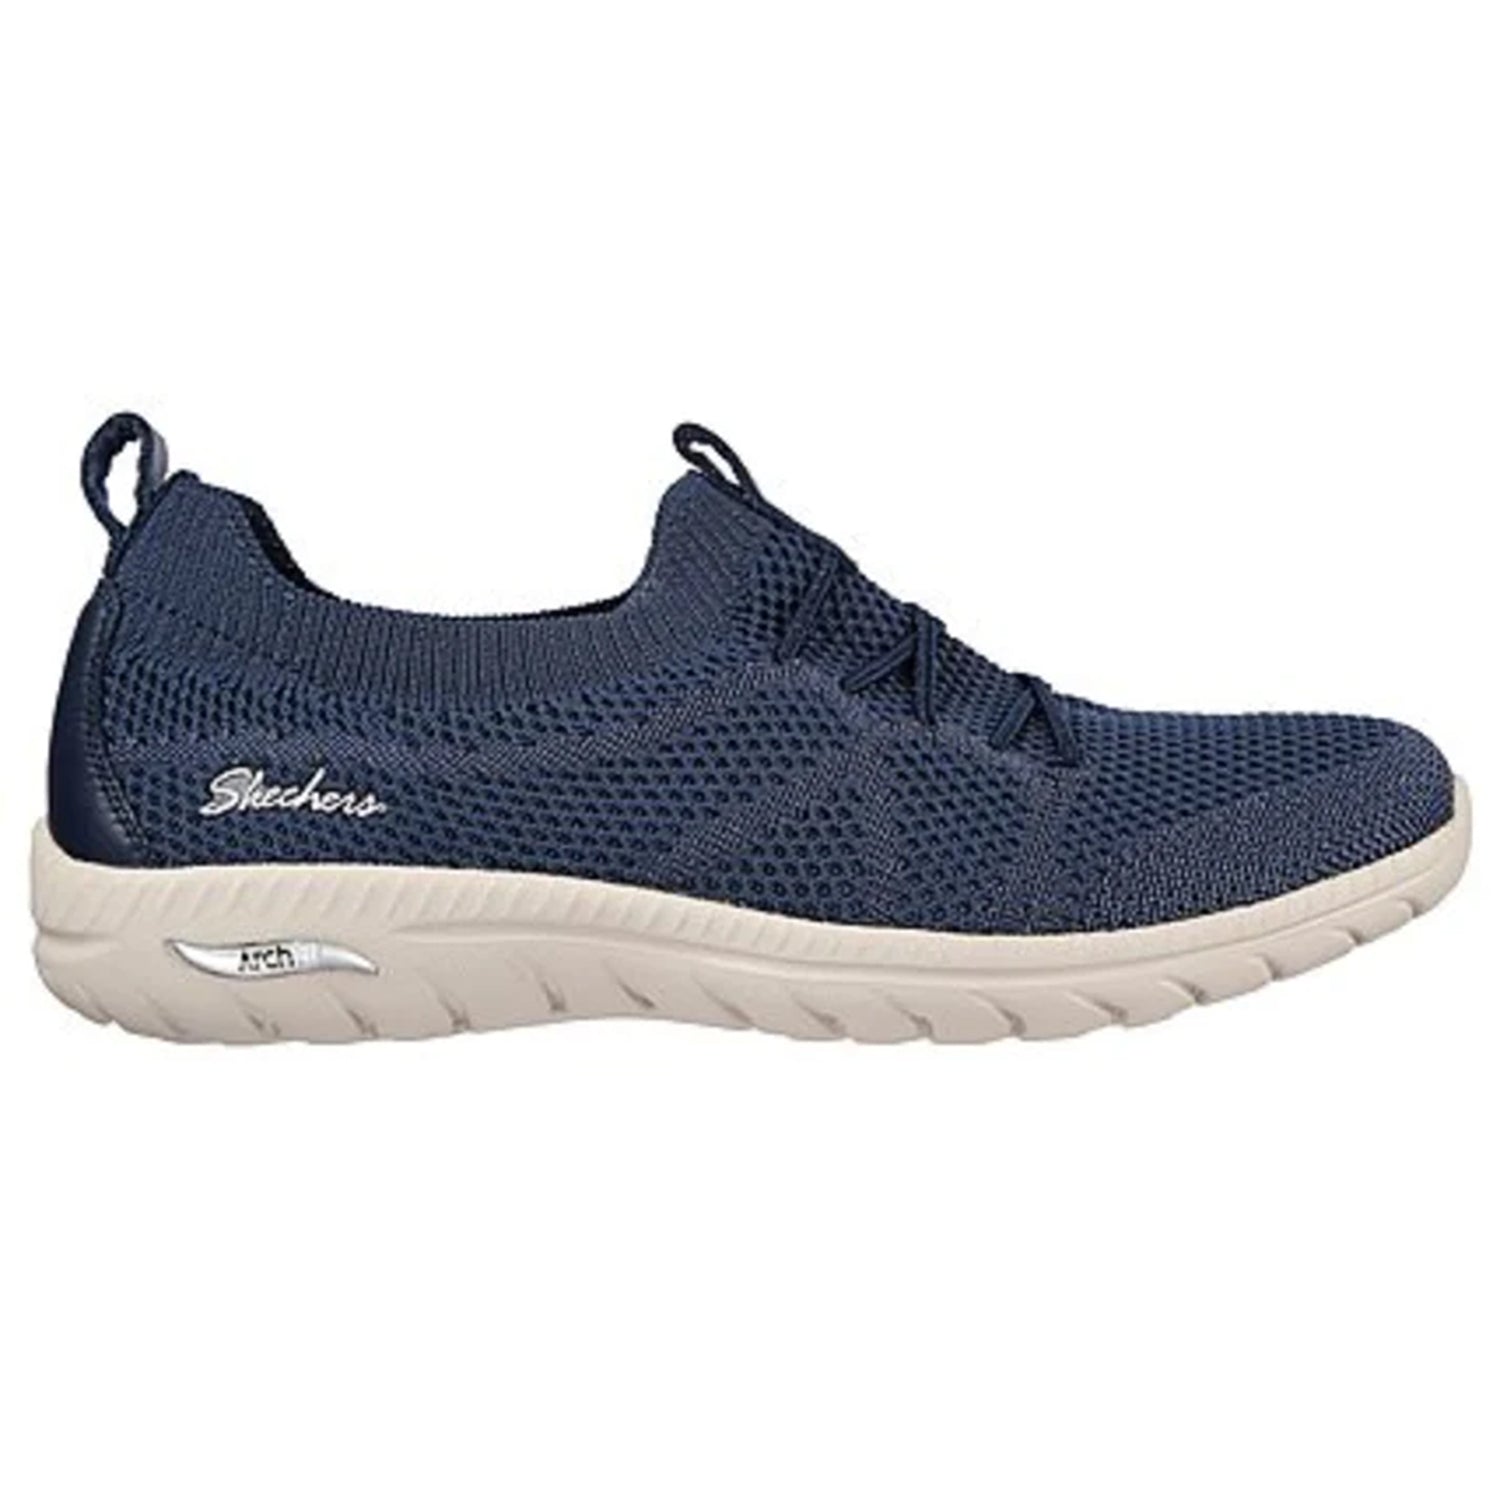 Skechers Arch Fit Flex  Women's Running Shoe - Best Price online Prokicksports.com